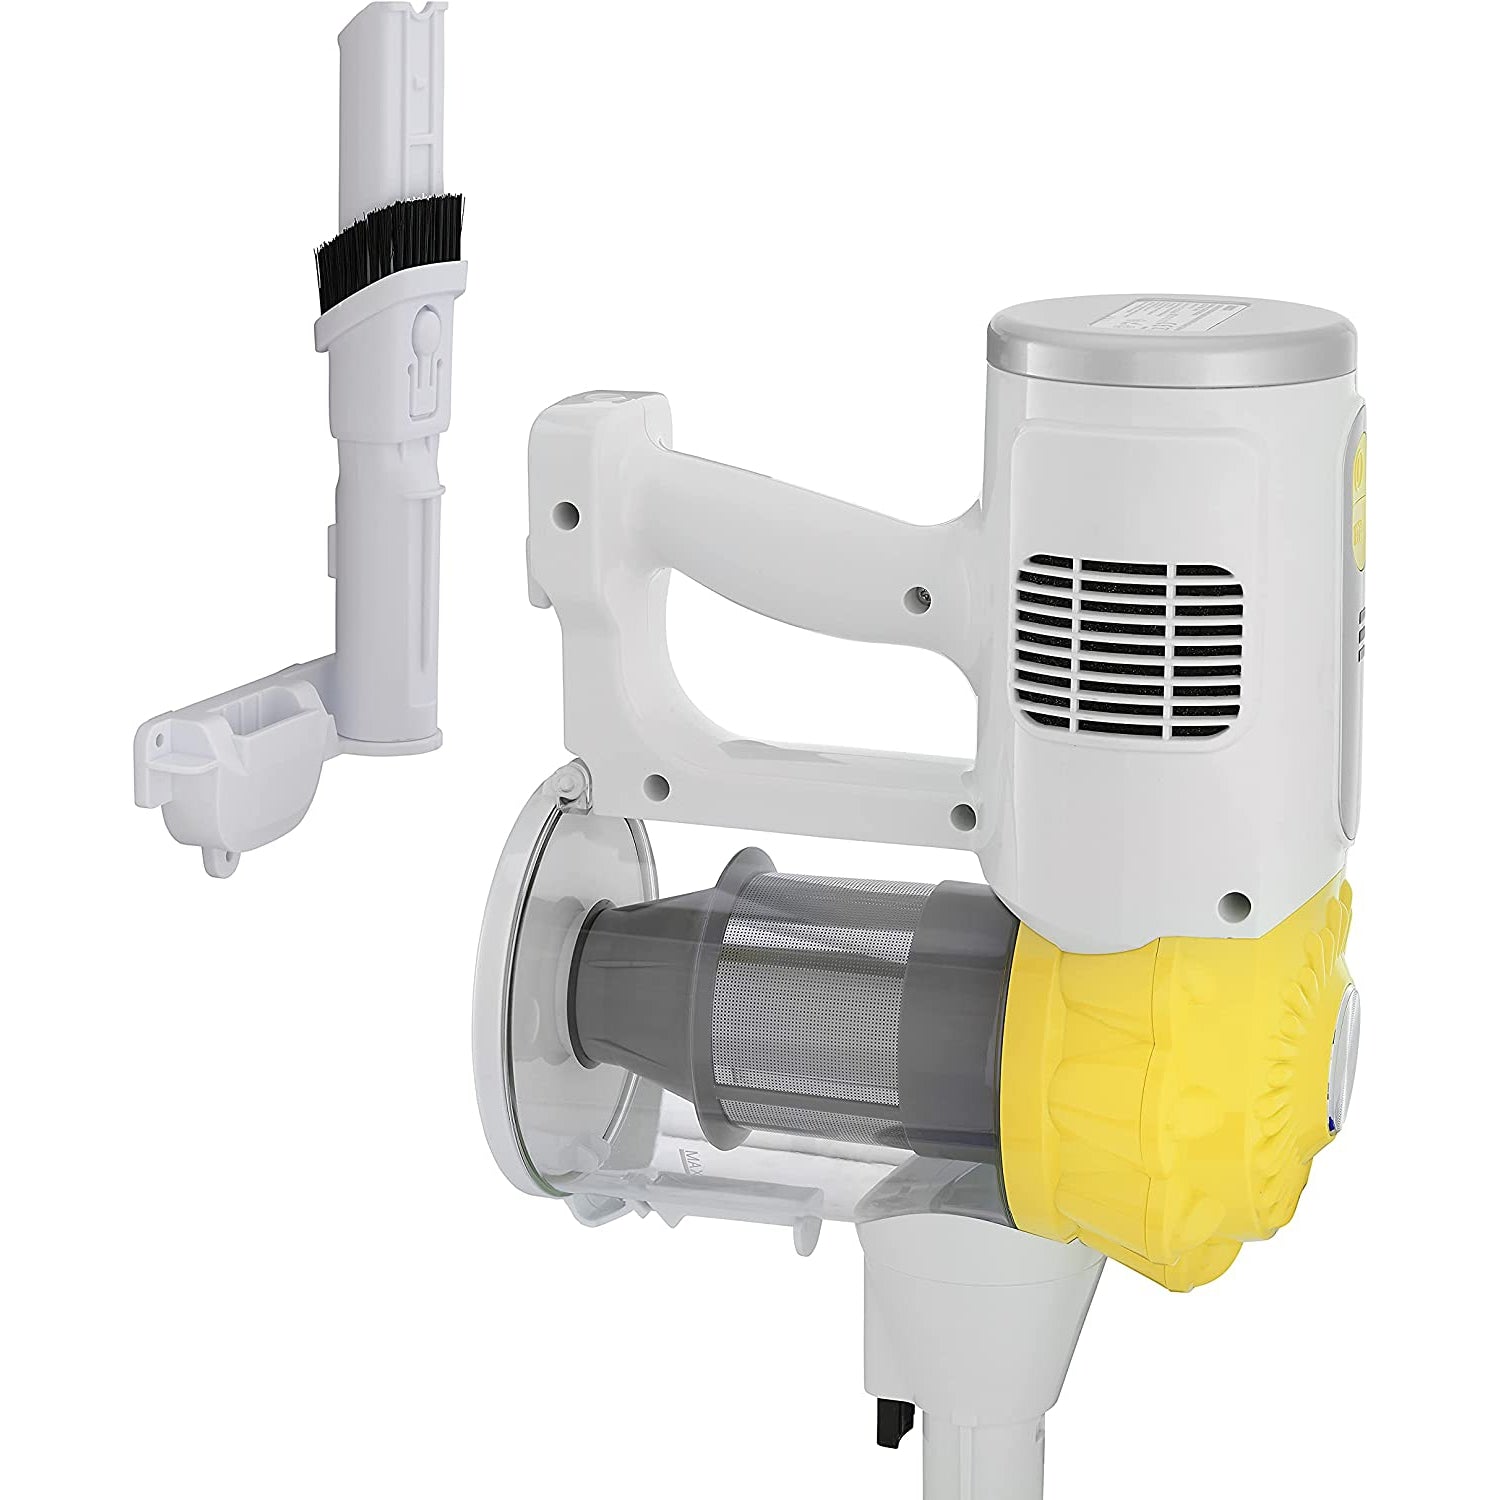 Zanussi Airwave ZHS-32802-YL Cordless Vacuum Cleaner - Yellow / Silver - Refurbished Pristine